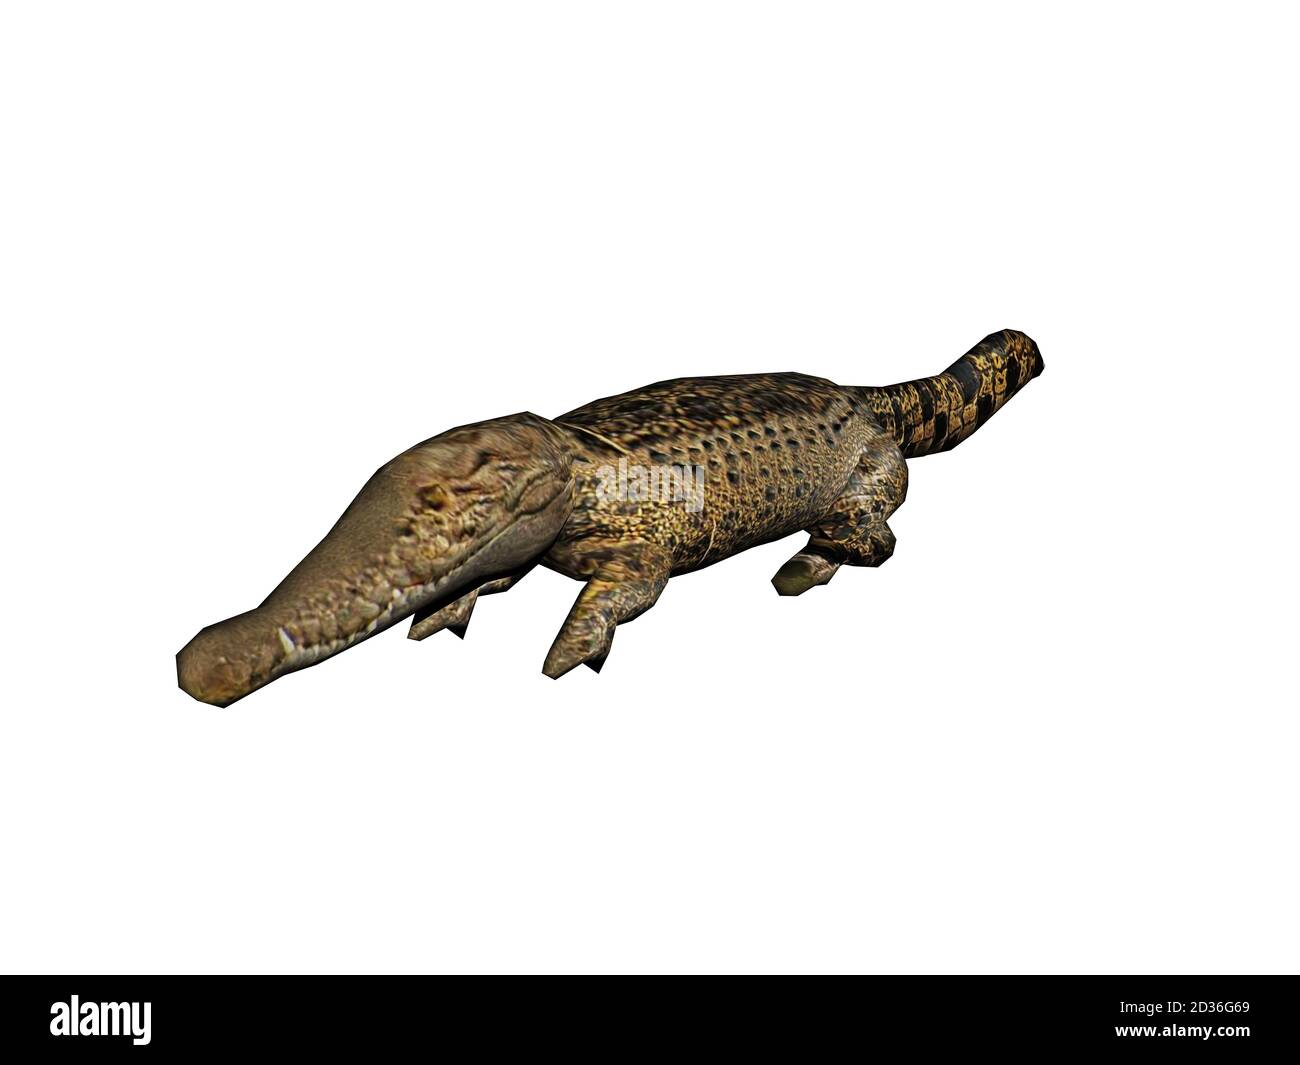 original crocodile with a long snout Stock Photo